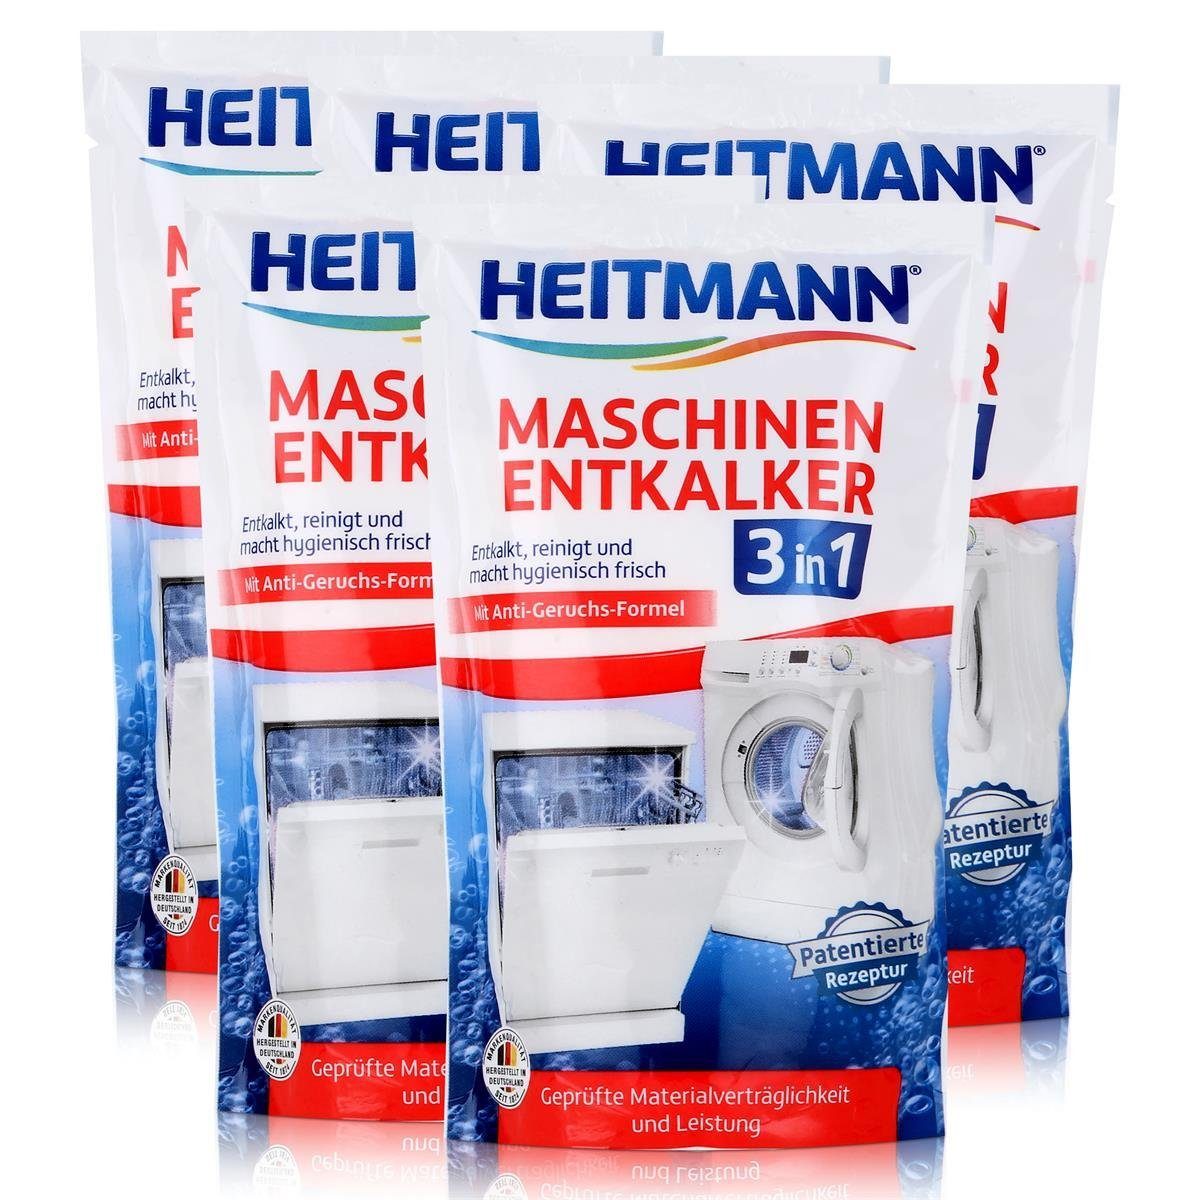 Maschinen - und 175g HEITMANN Heitmann Geschirrspüler Spezialwaschmittel Waschmaschinen Entkalker